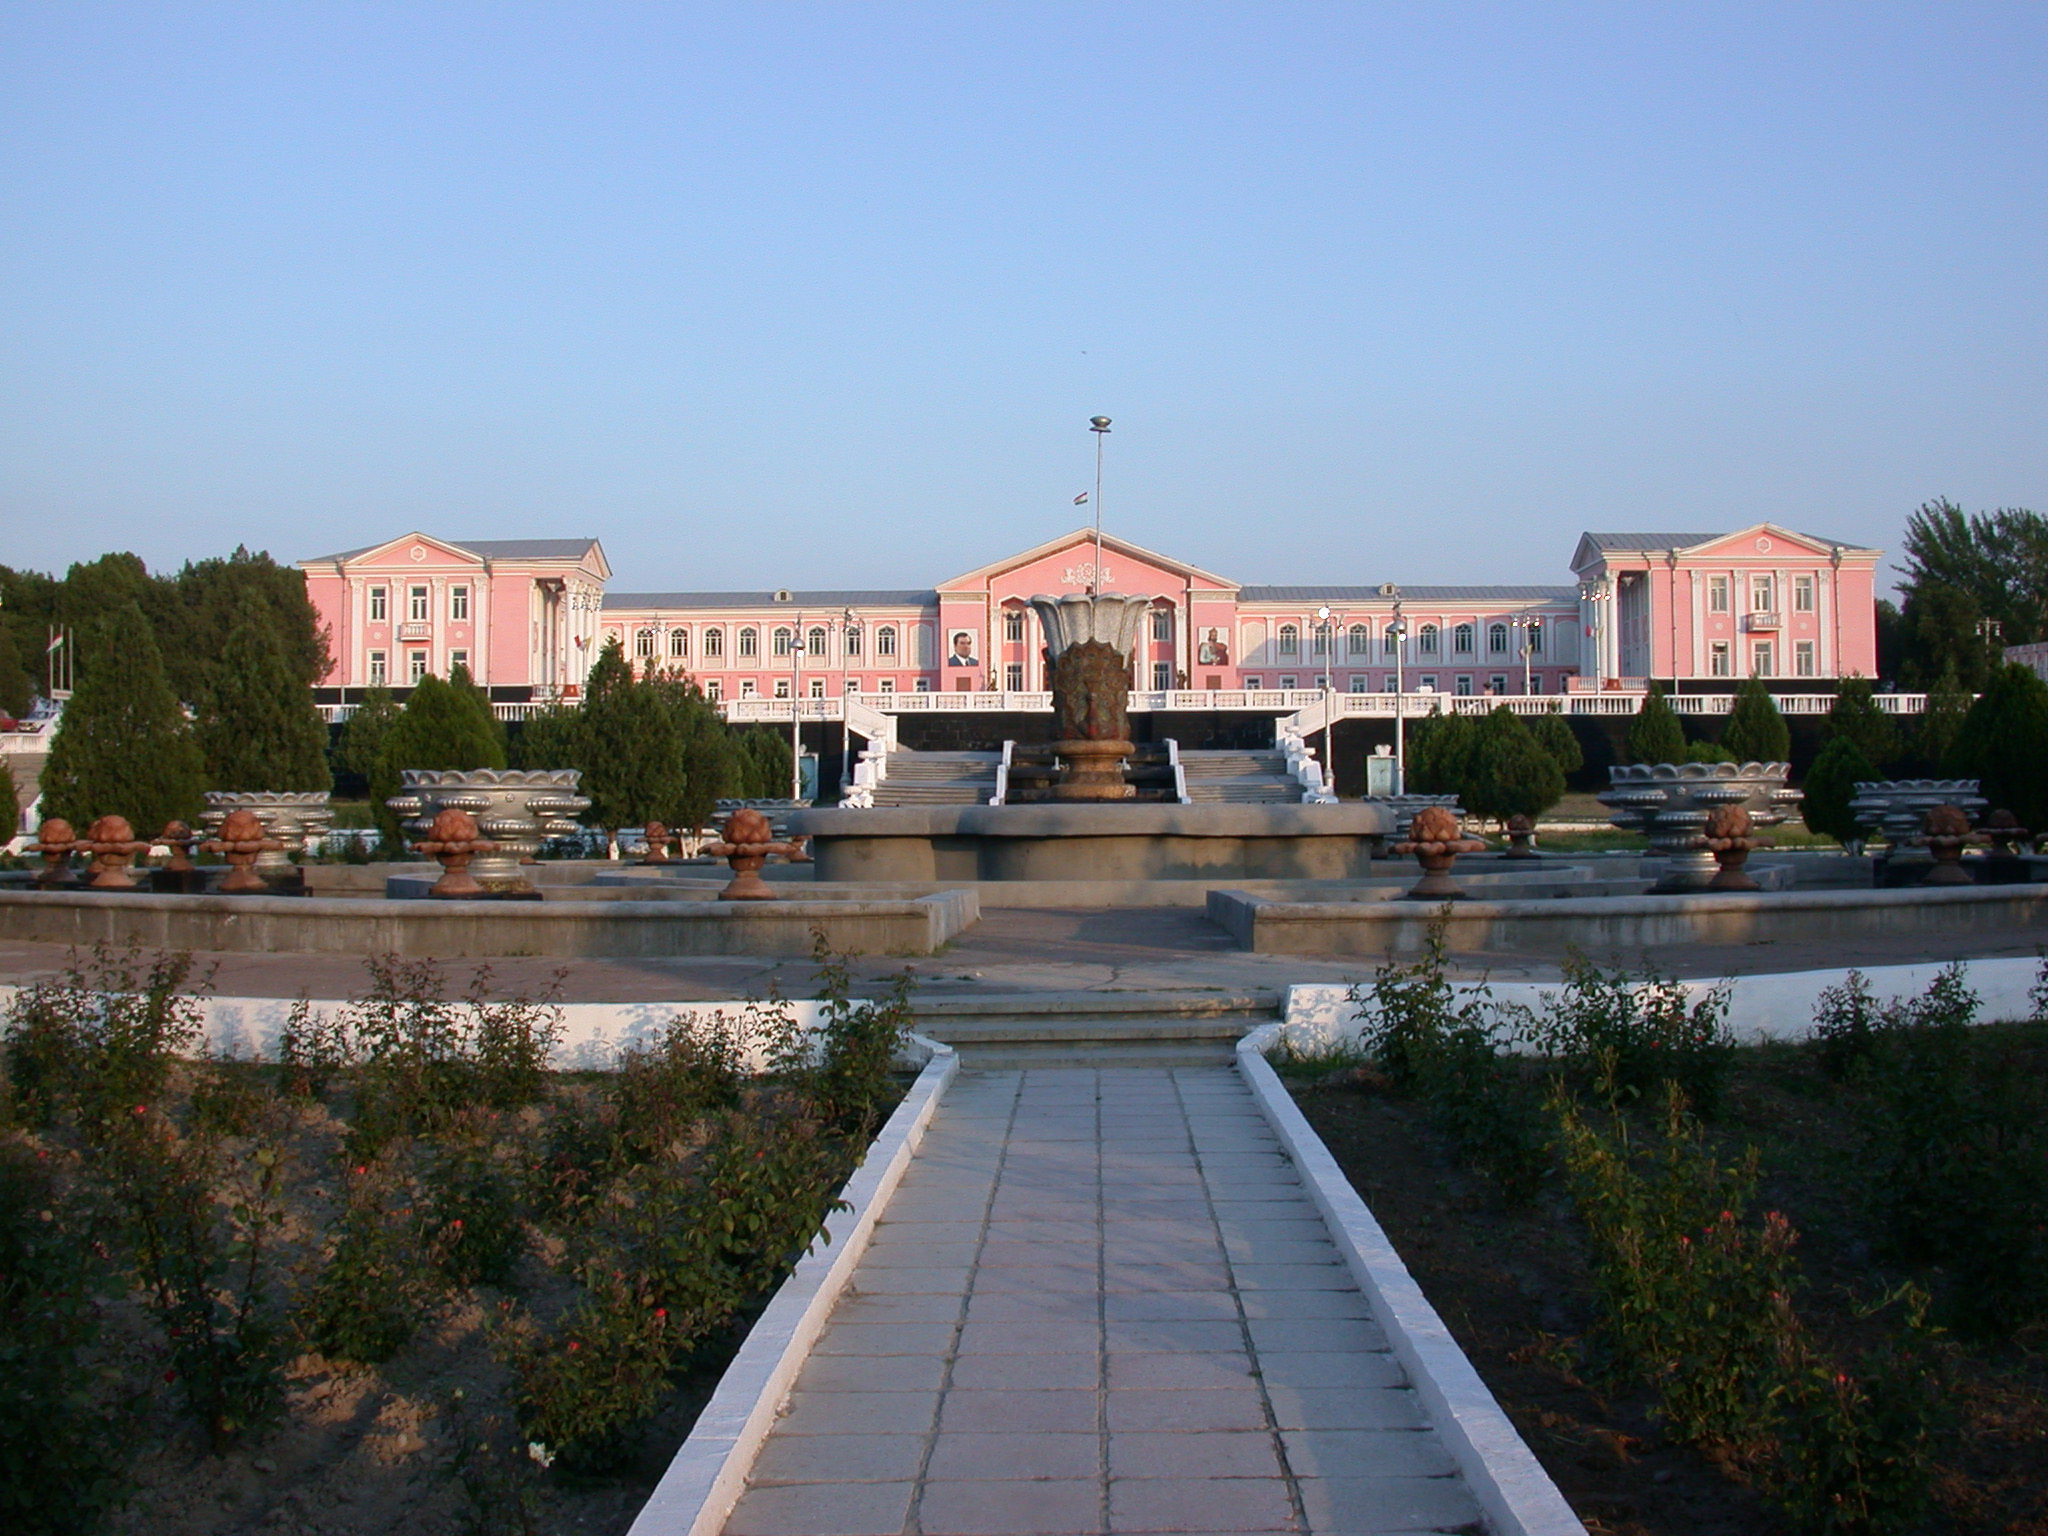 Республики Таджикистан Город Худжанд Секс Знакомства